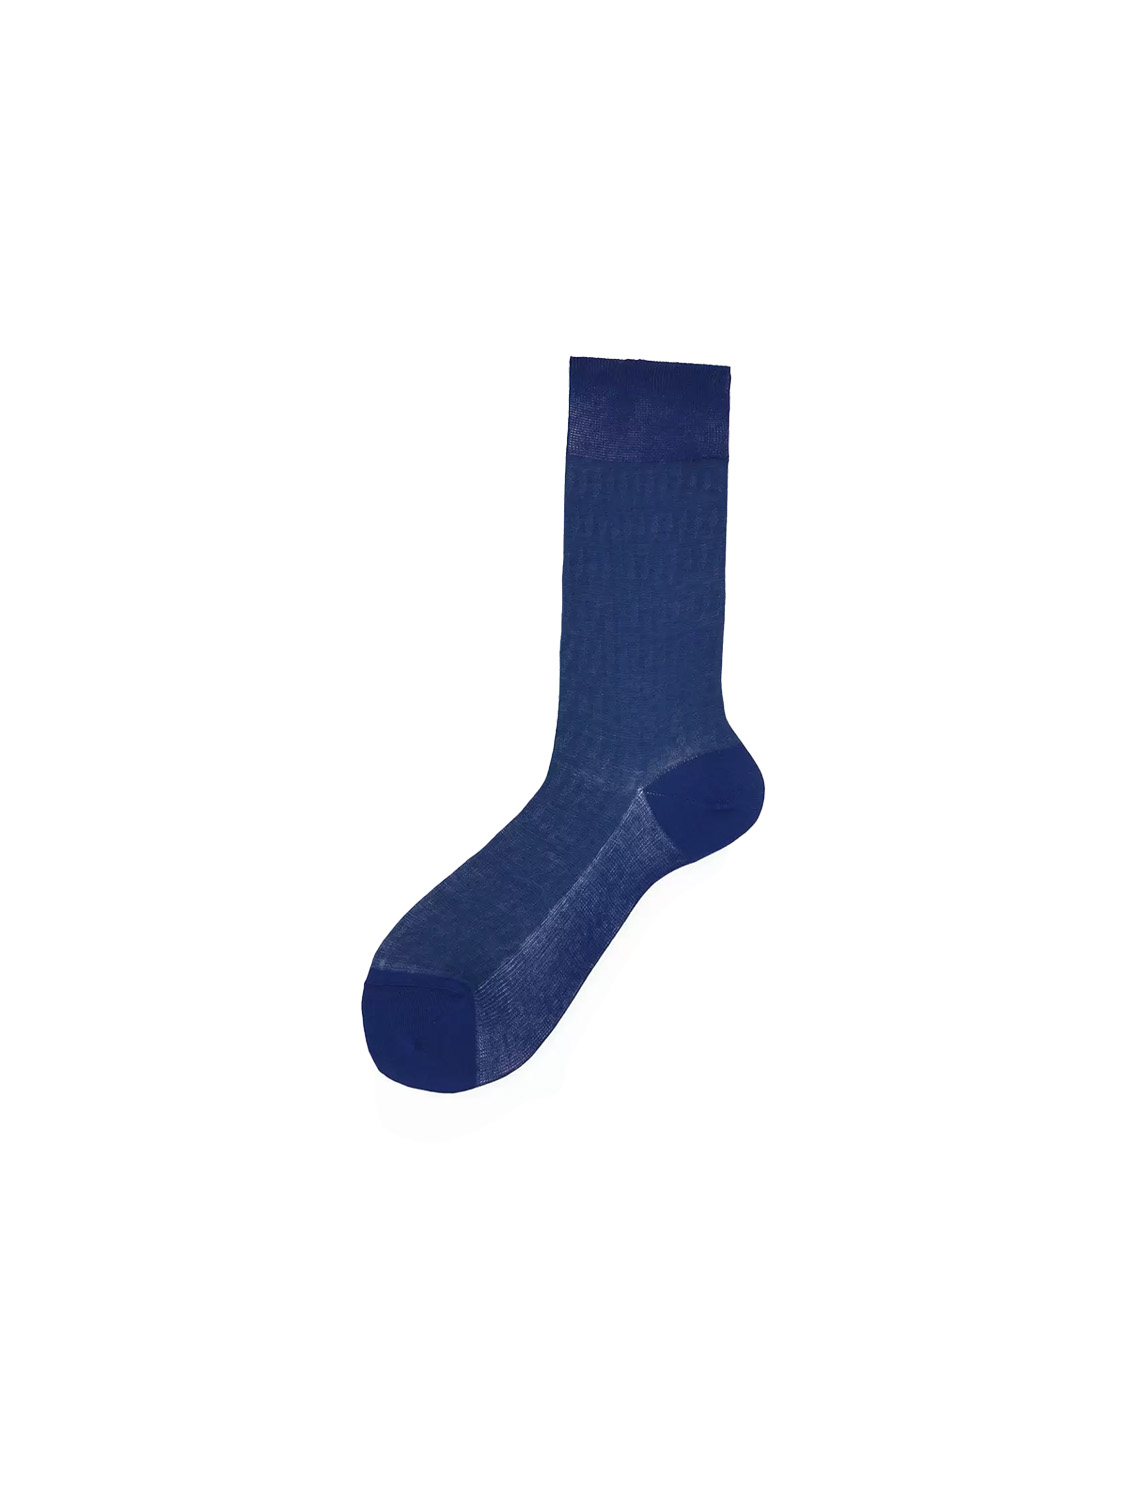 Alto Pyne – Kurze Baumwoll-Socken mit gestreiftem Muster   marine One Size